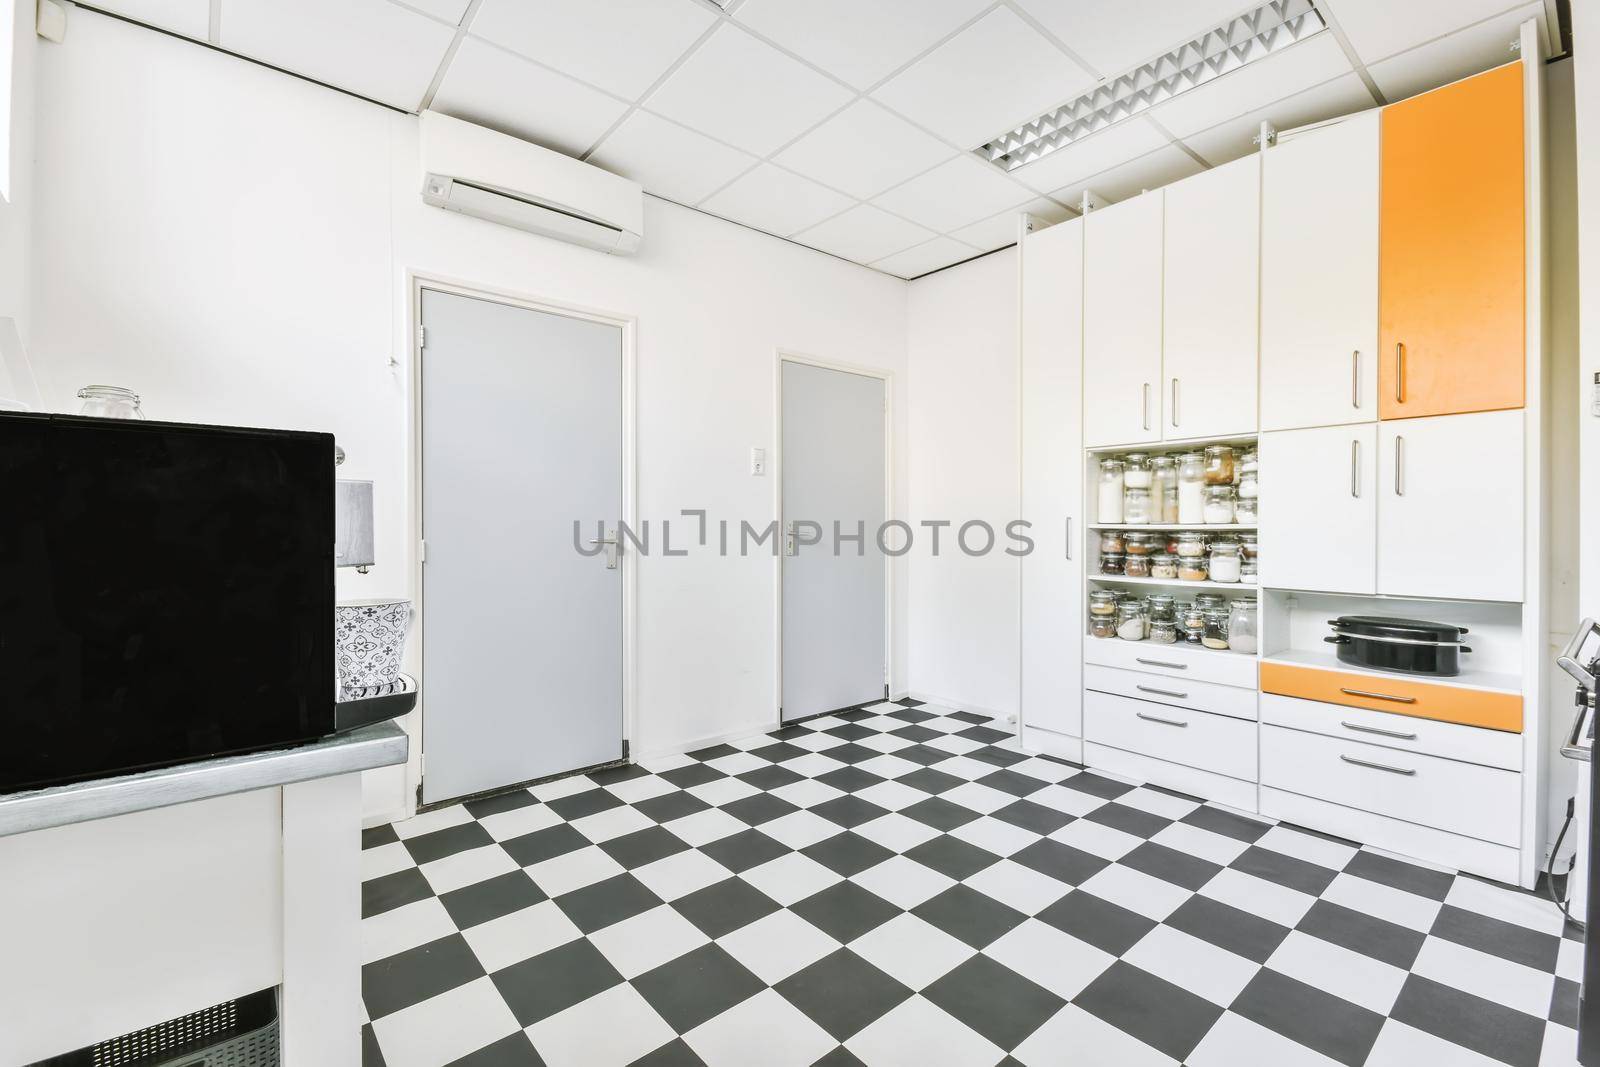 Room with checkerboard floor by casamedia